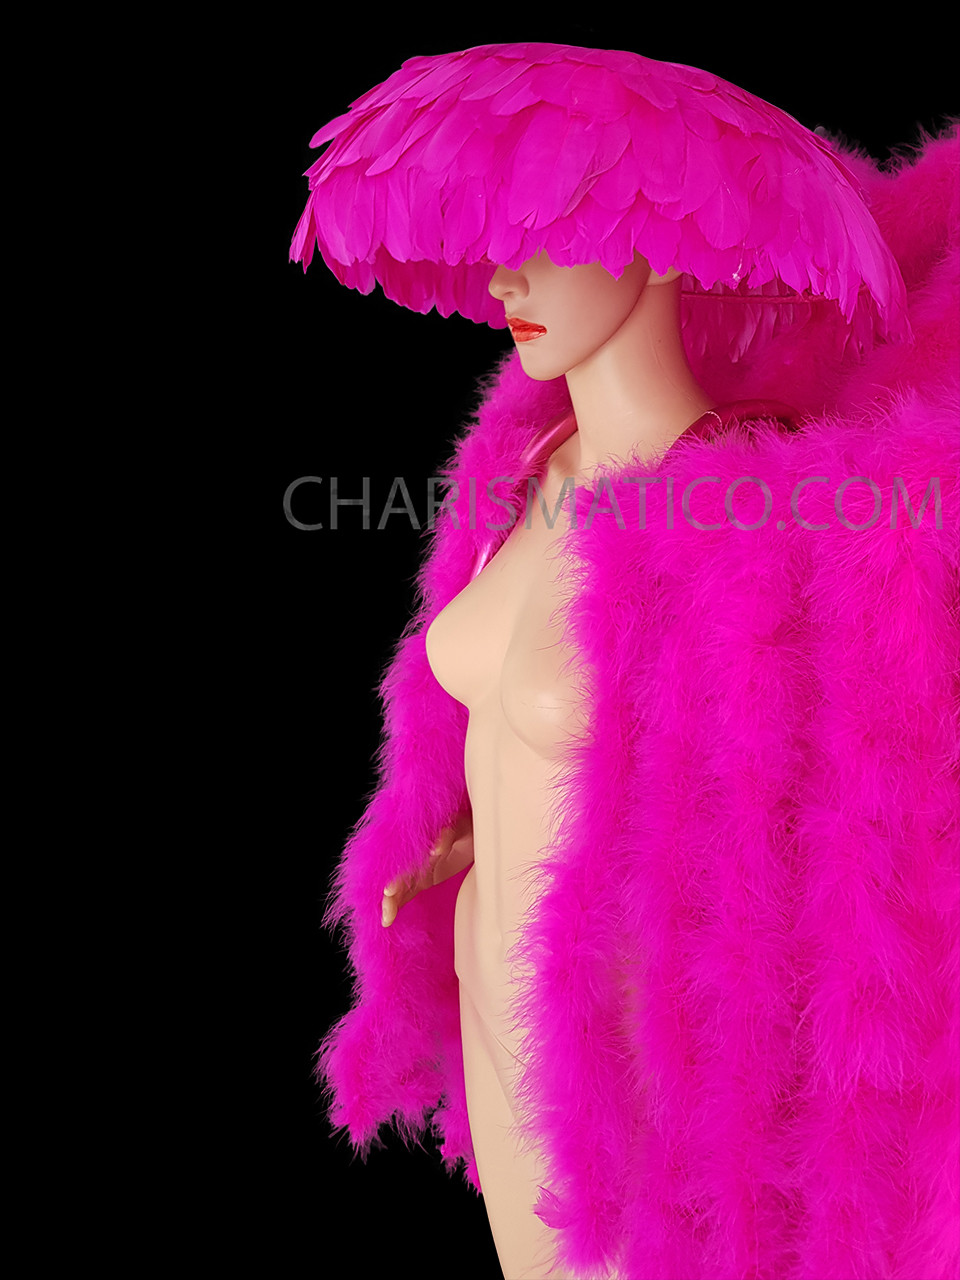 Light Up Pink Glam LED Faux Fur Boa